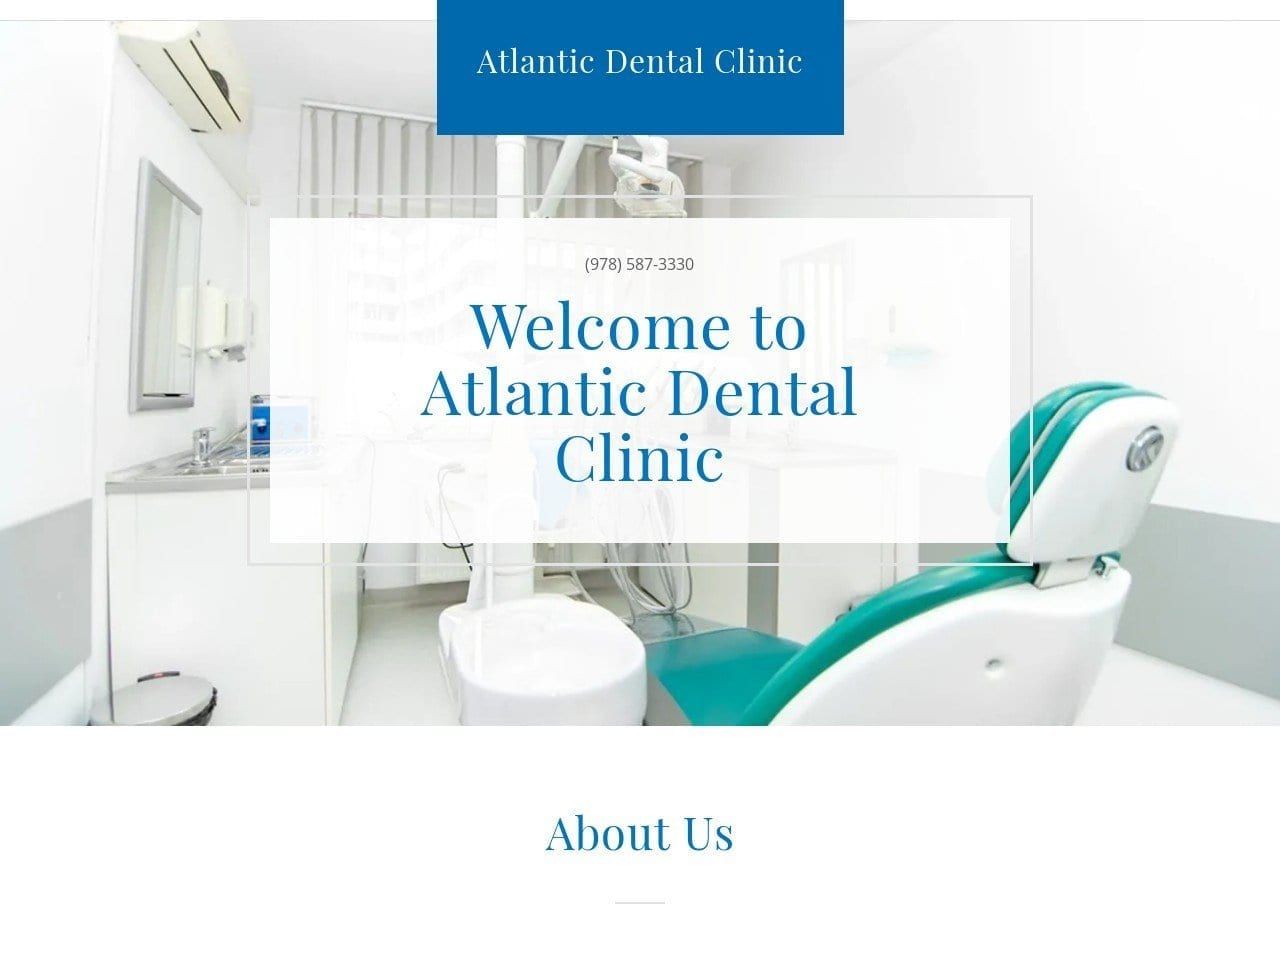 Atlantic Dental Clinic Website Screenshot from atlanticdentalclinic.com